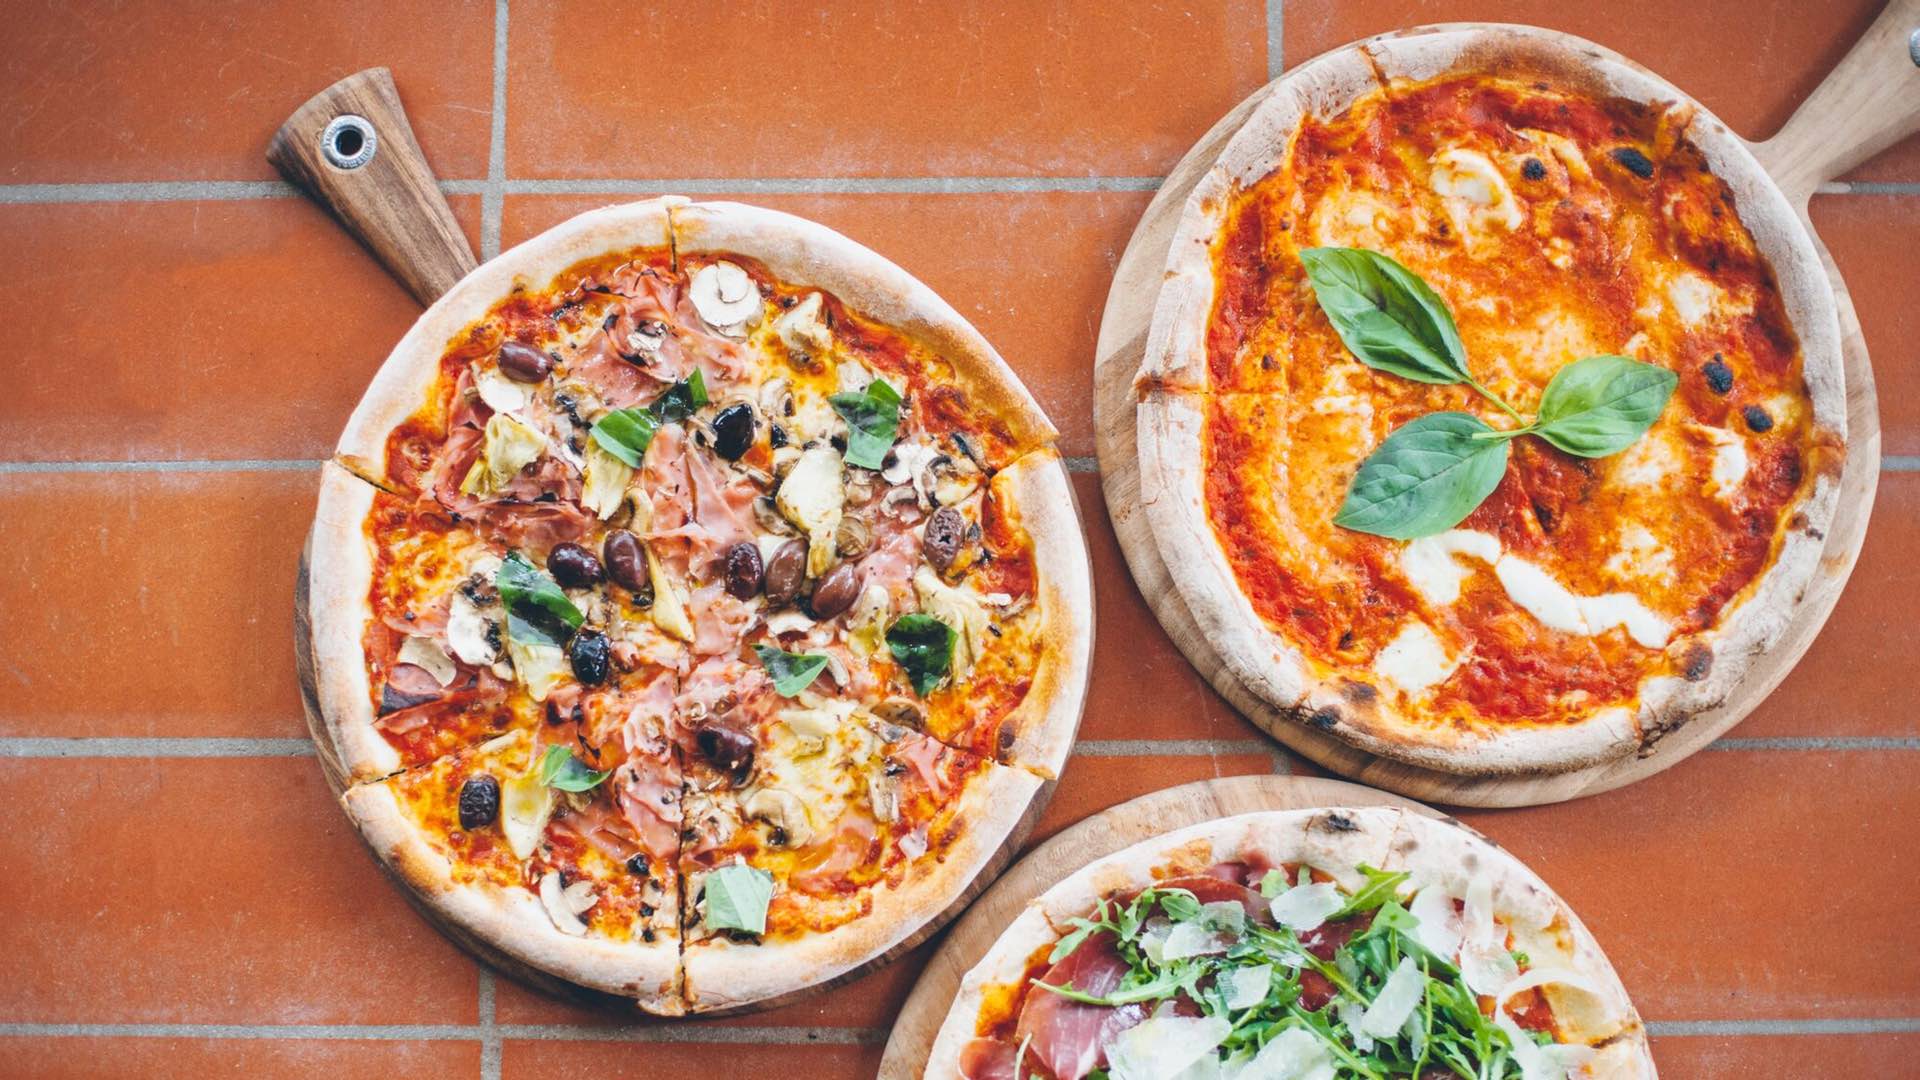 Sydney's Italian Street Kitchen Has Come to Brisbane